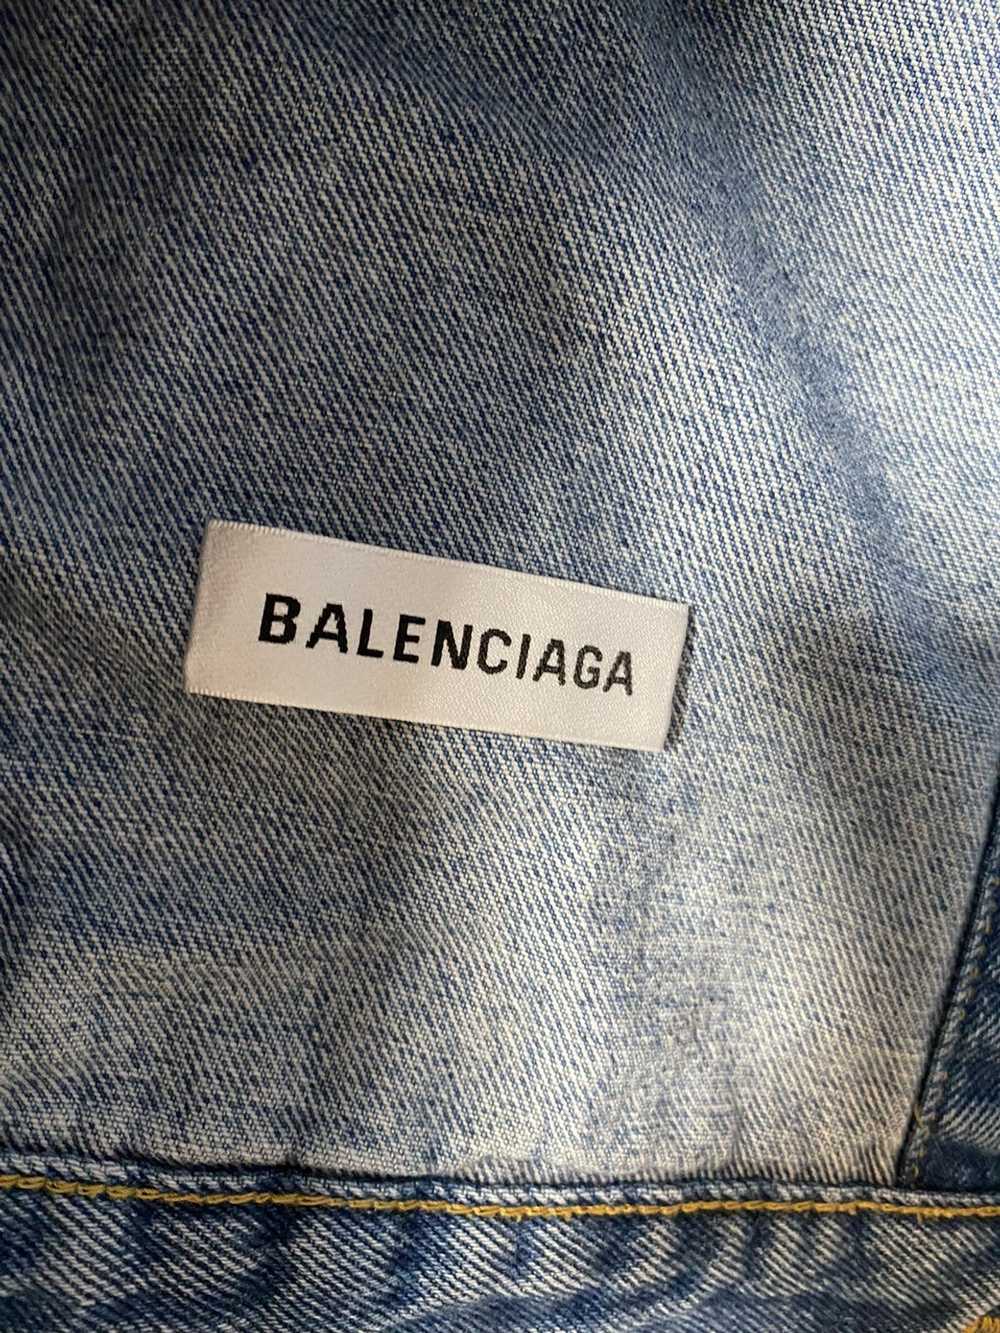 Balenciaga 2018 Swing Denim Jacket - image 5